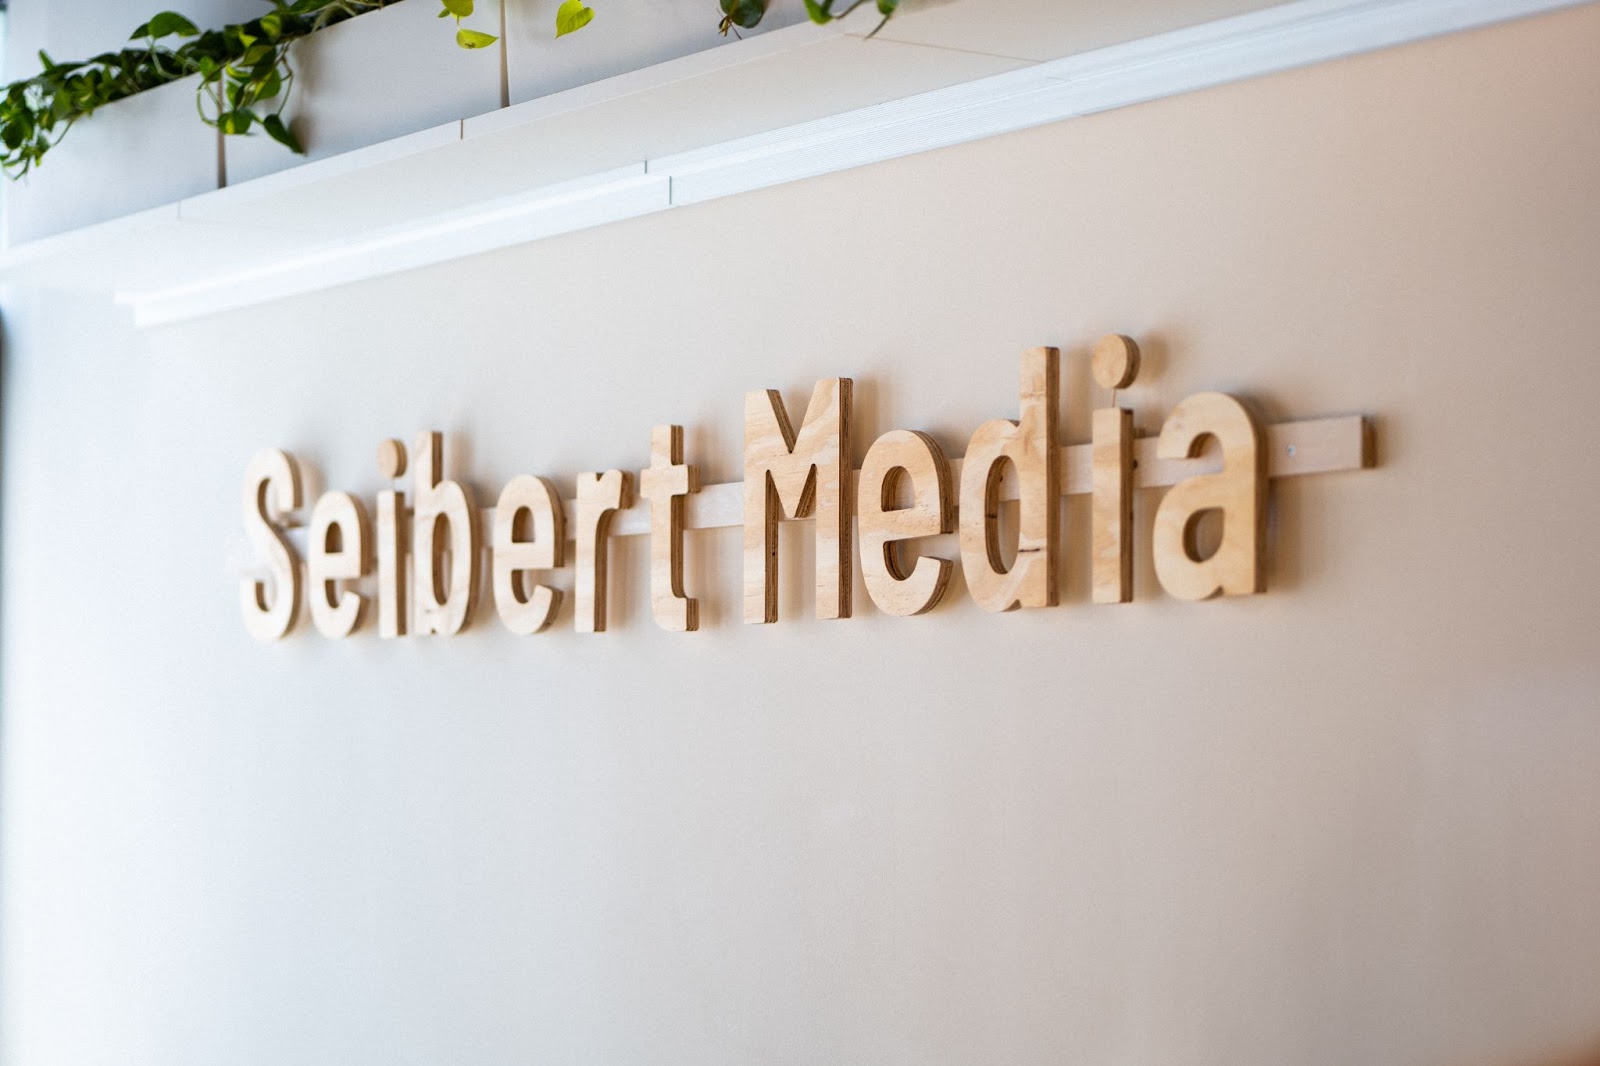 We Won an Award! Seibert Media is one of the "Best IT Service Providers 2023"! - seibert media logo on wall